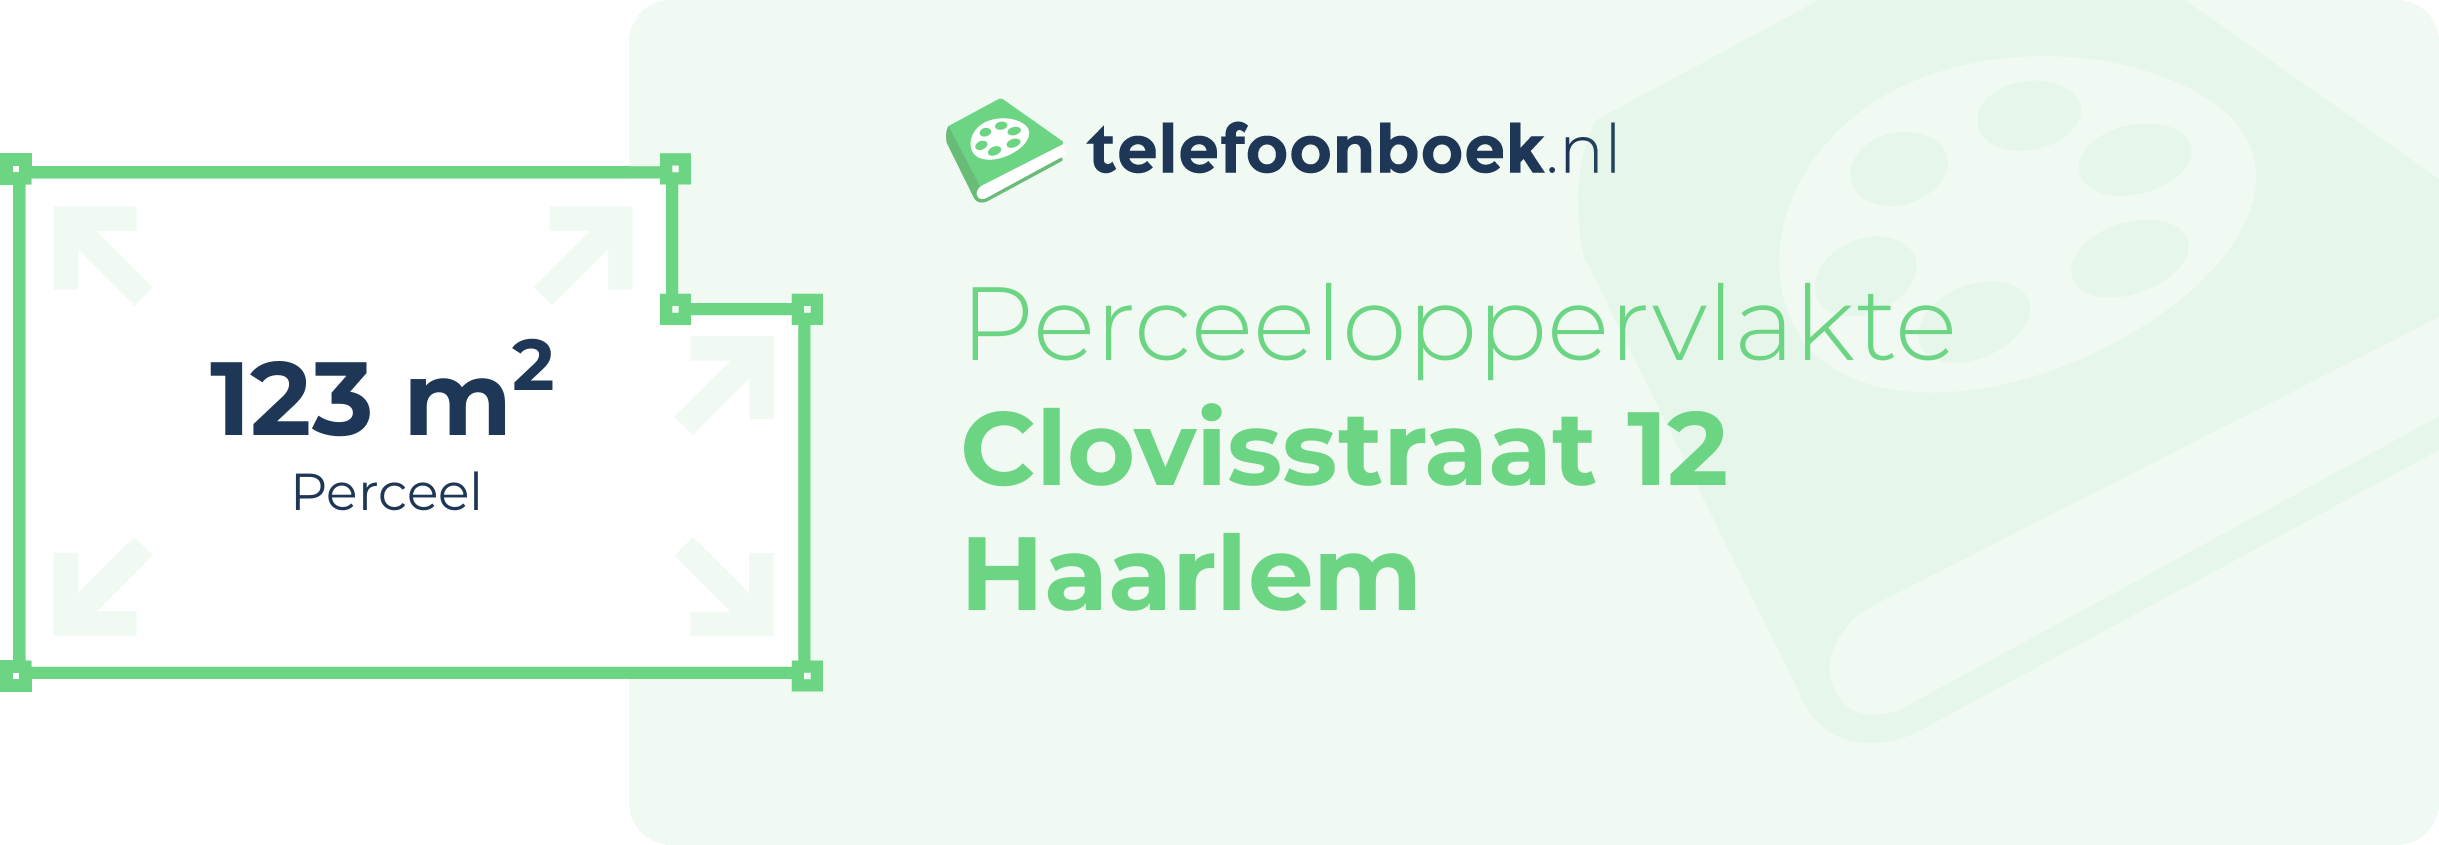 Perceeloppervlakte Clovisstraat 12 Haarlem